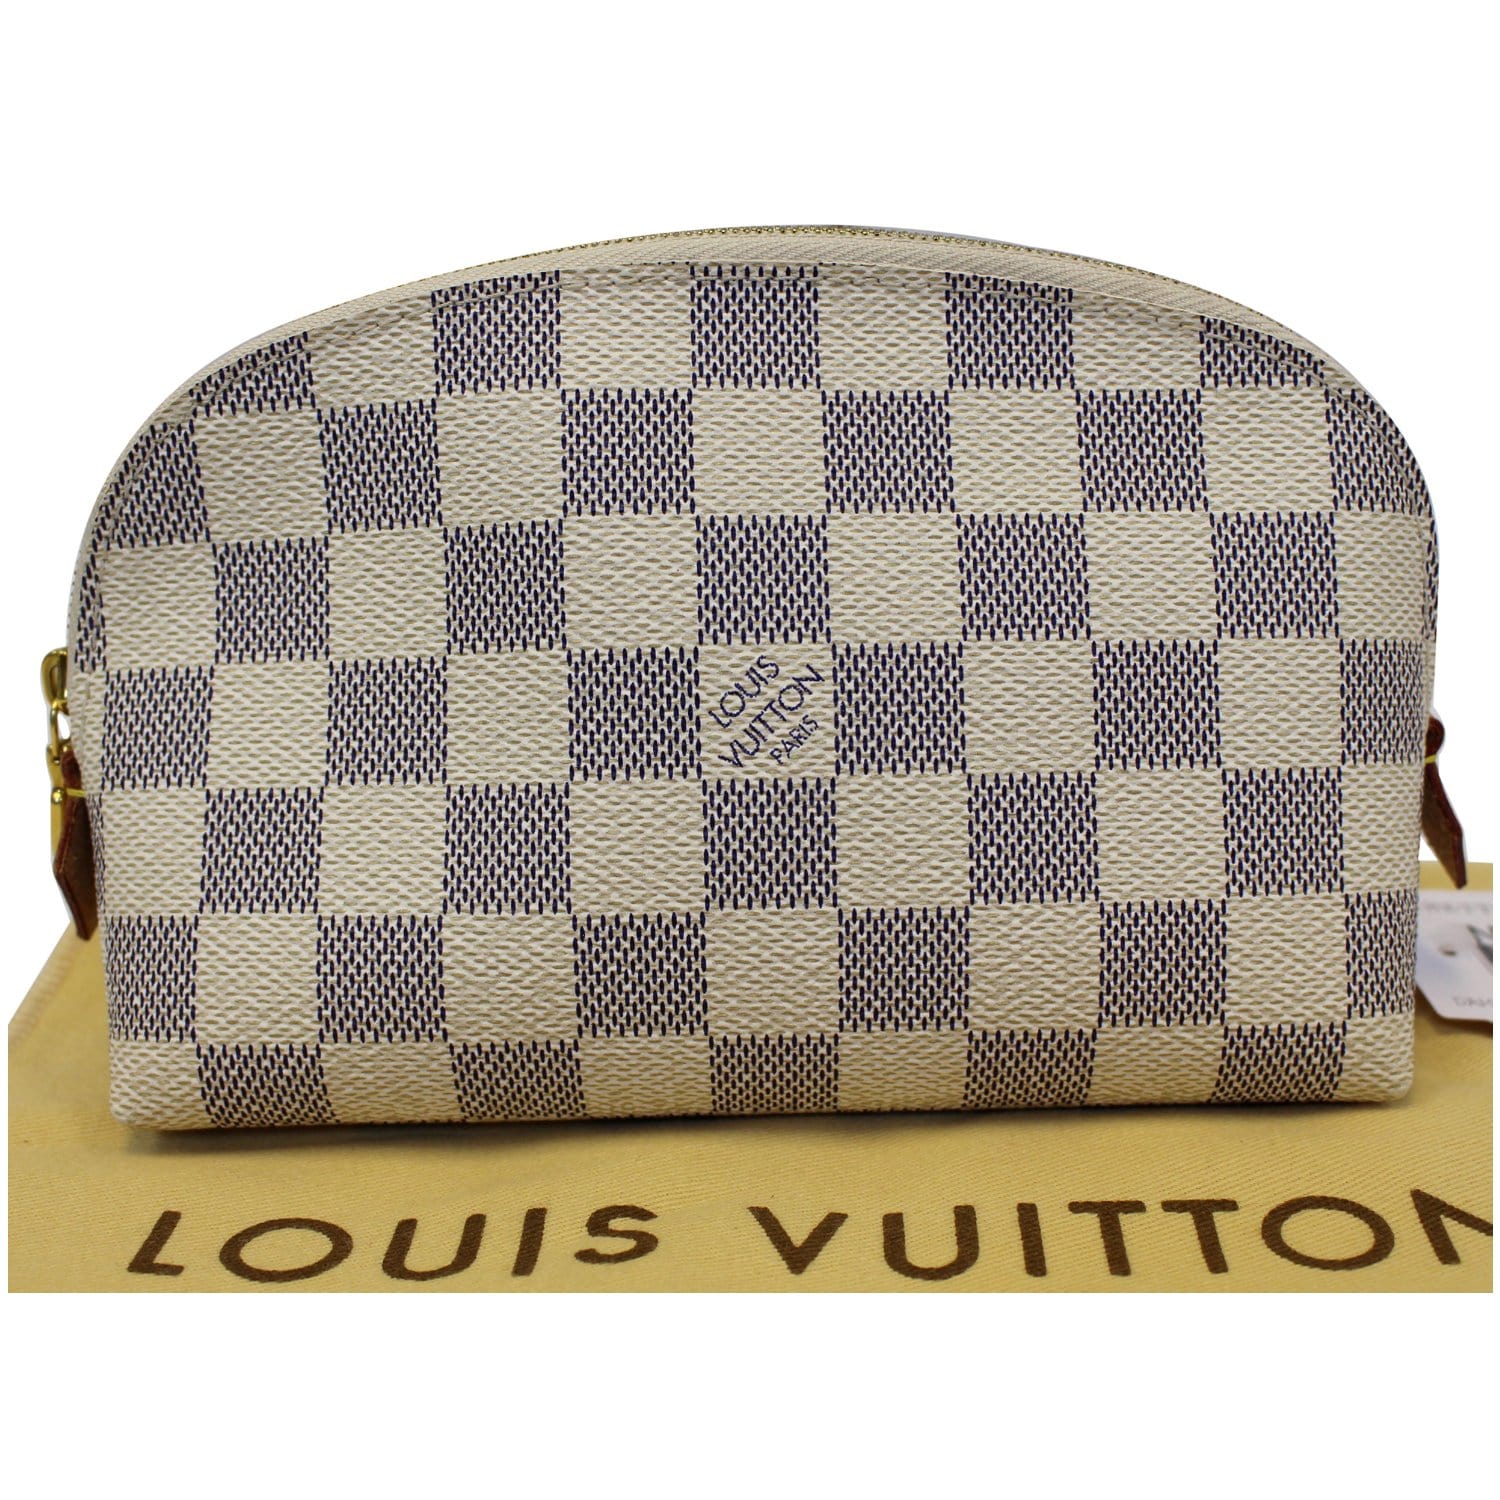 Shop Louis Vuitton DAMIER AZUR Cosmetic Pouch (N60024) by Bellaris